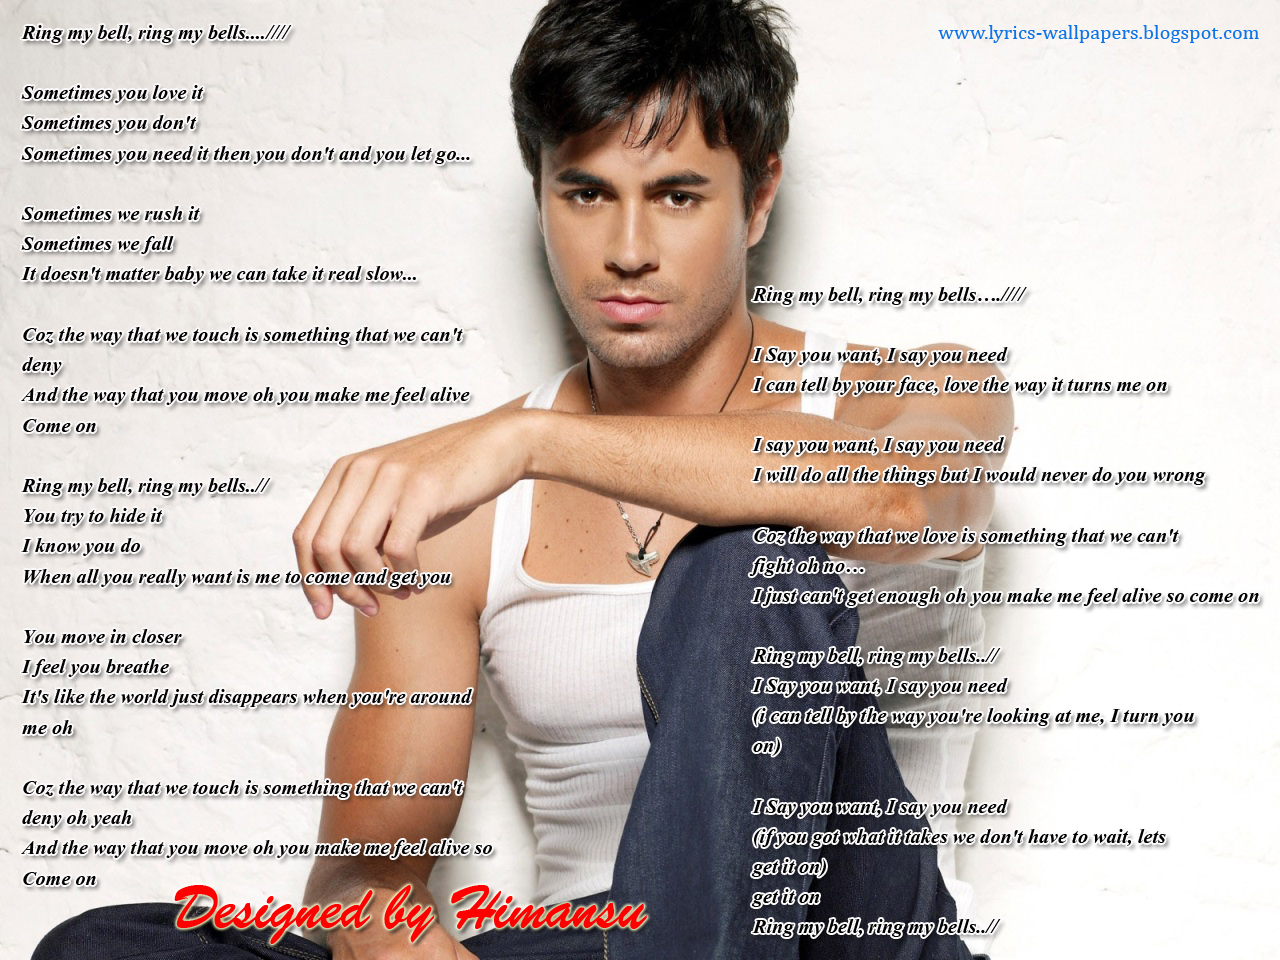 Lyrics Wallpapers: Enrique Iglesias - Ring my bells1280 x 960